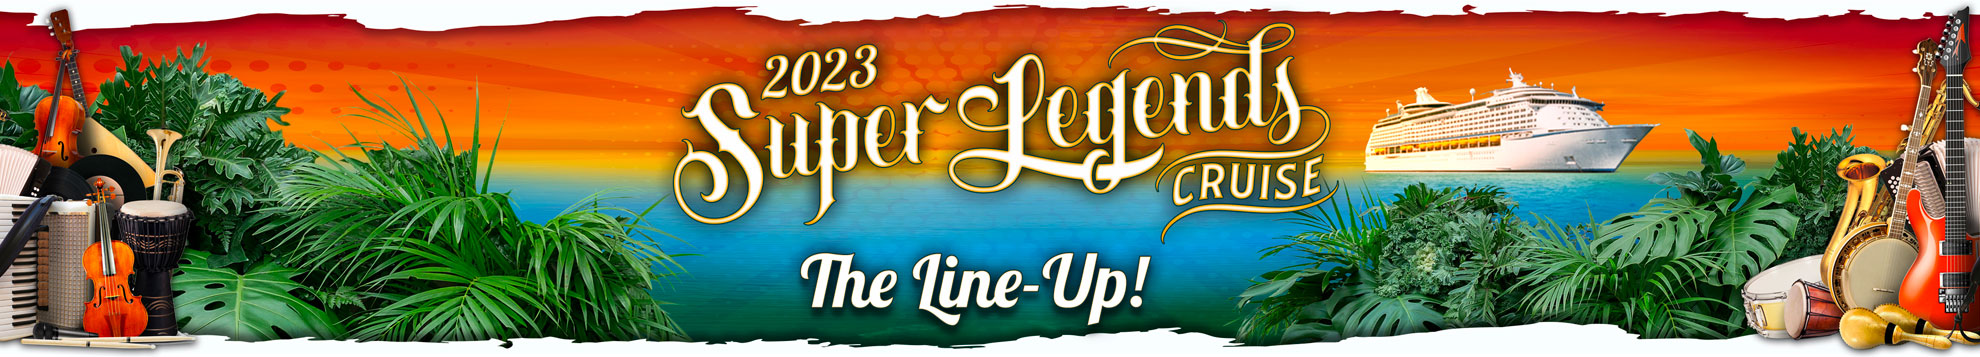 Super Legends Cruise 2023: Line Up